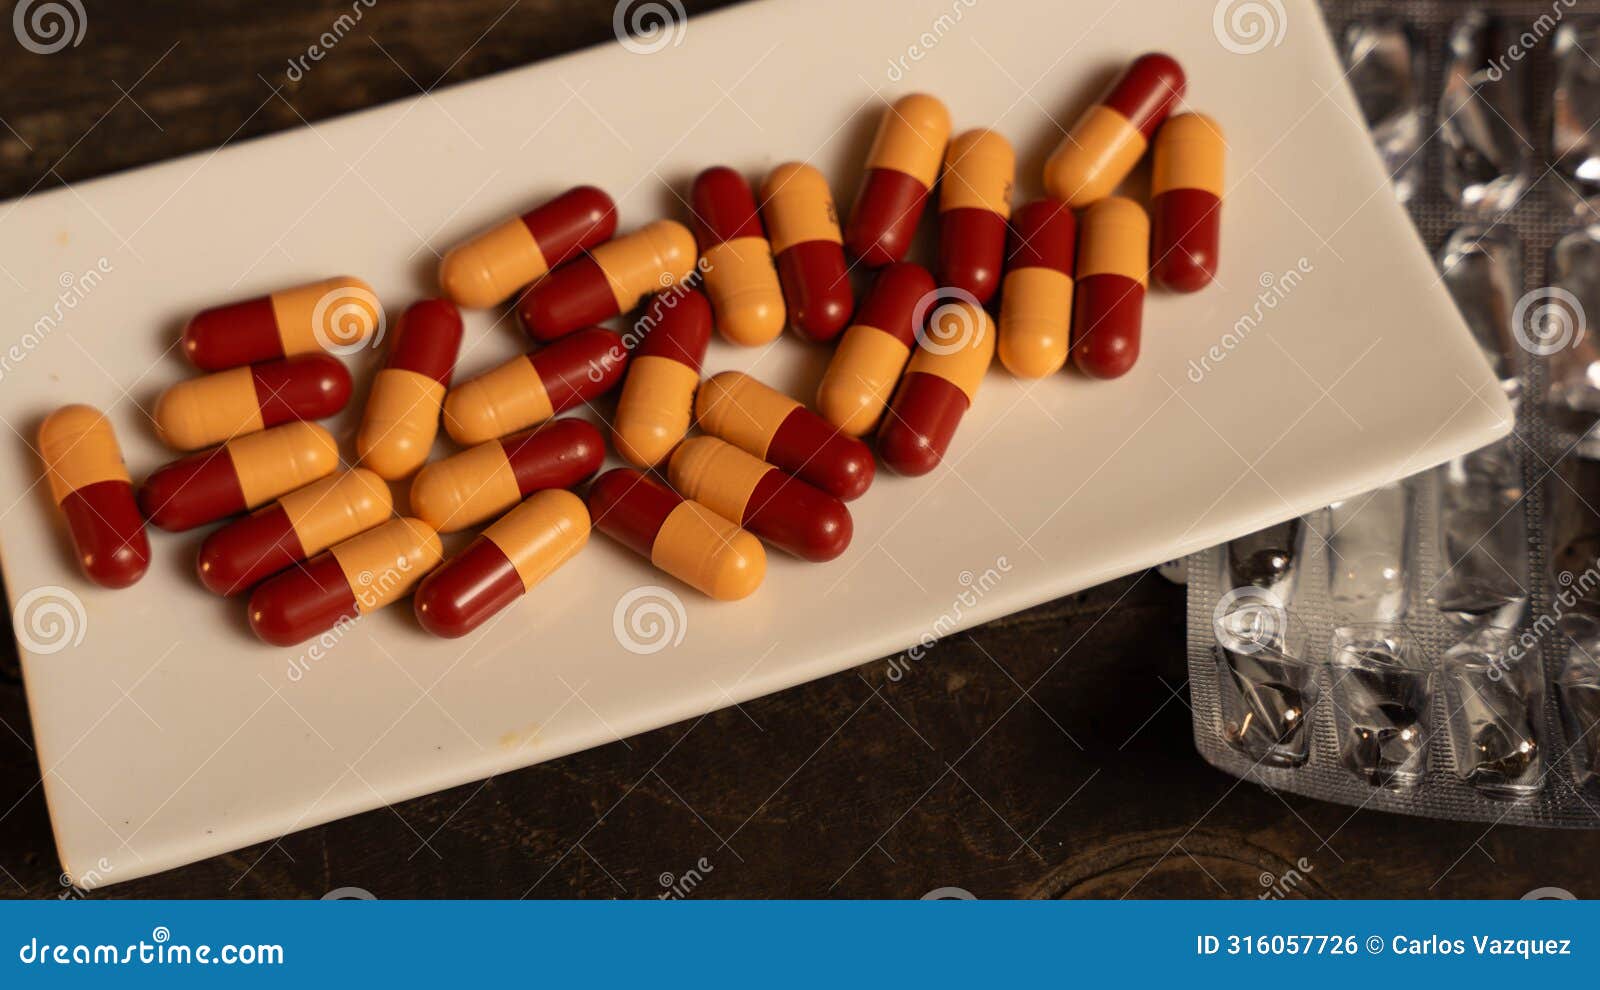 capsules in the dish